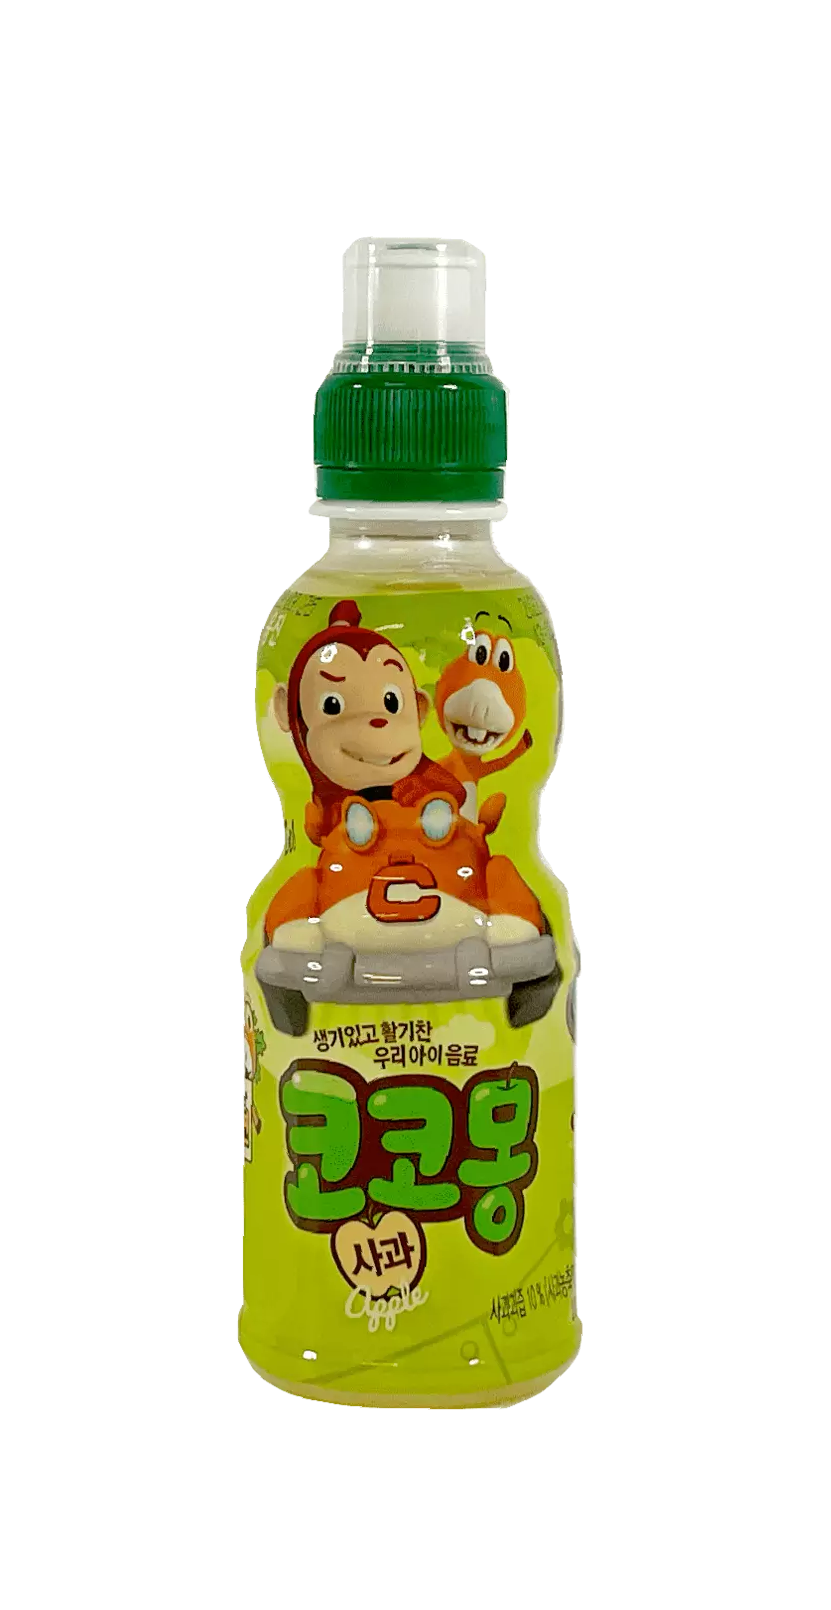 Cocomong Äpple Smak 200ml PET Woongjin Korea